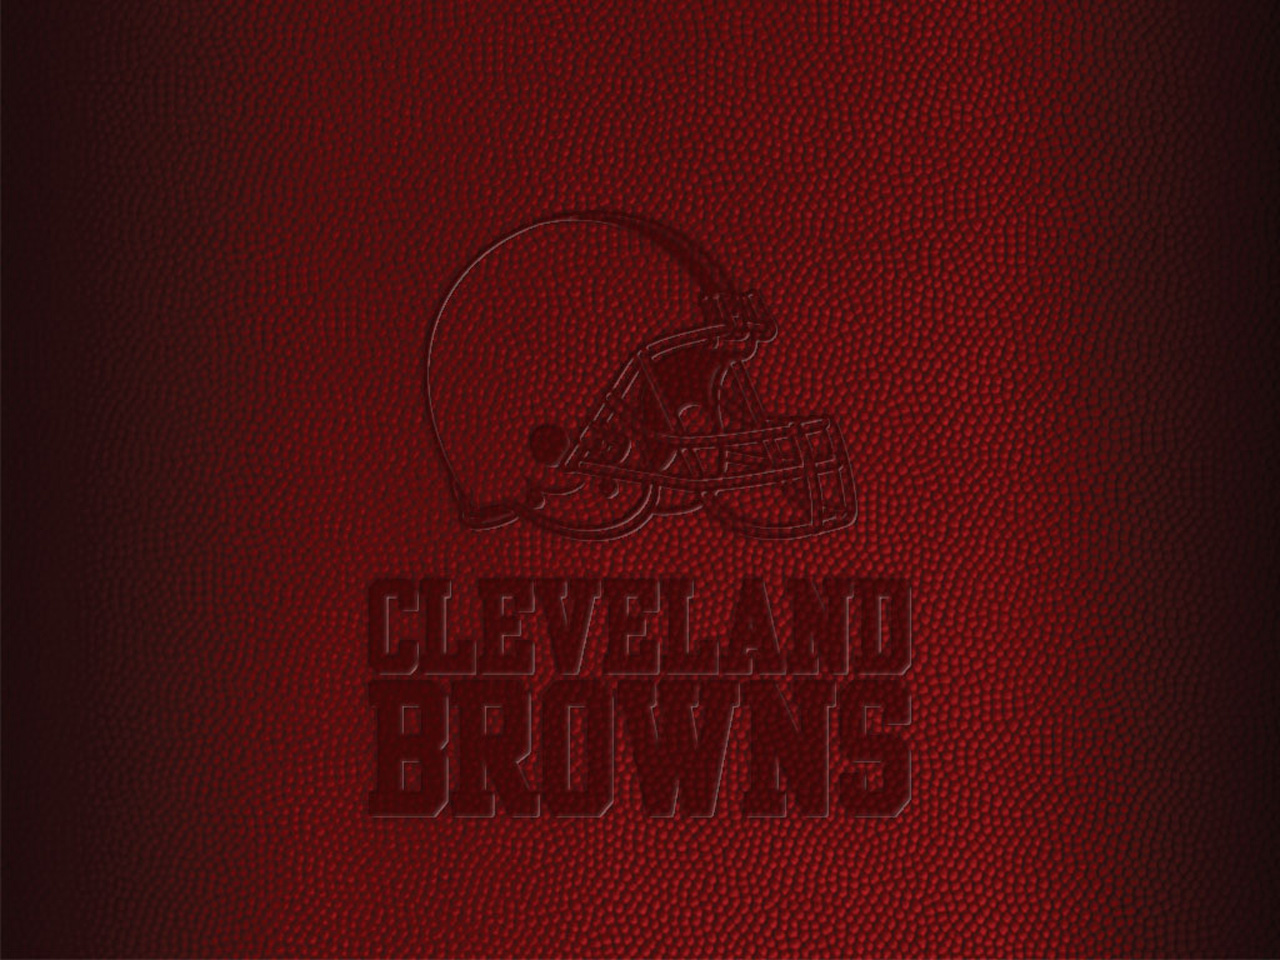 Cleveland Browns Stadium Wallpaper